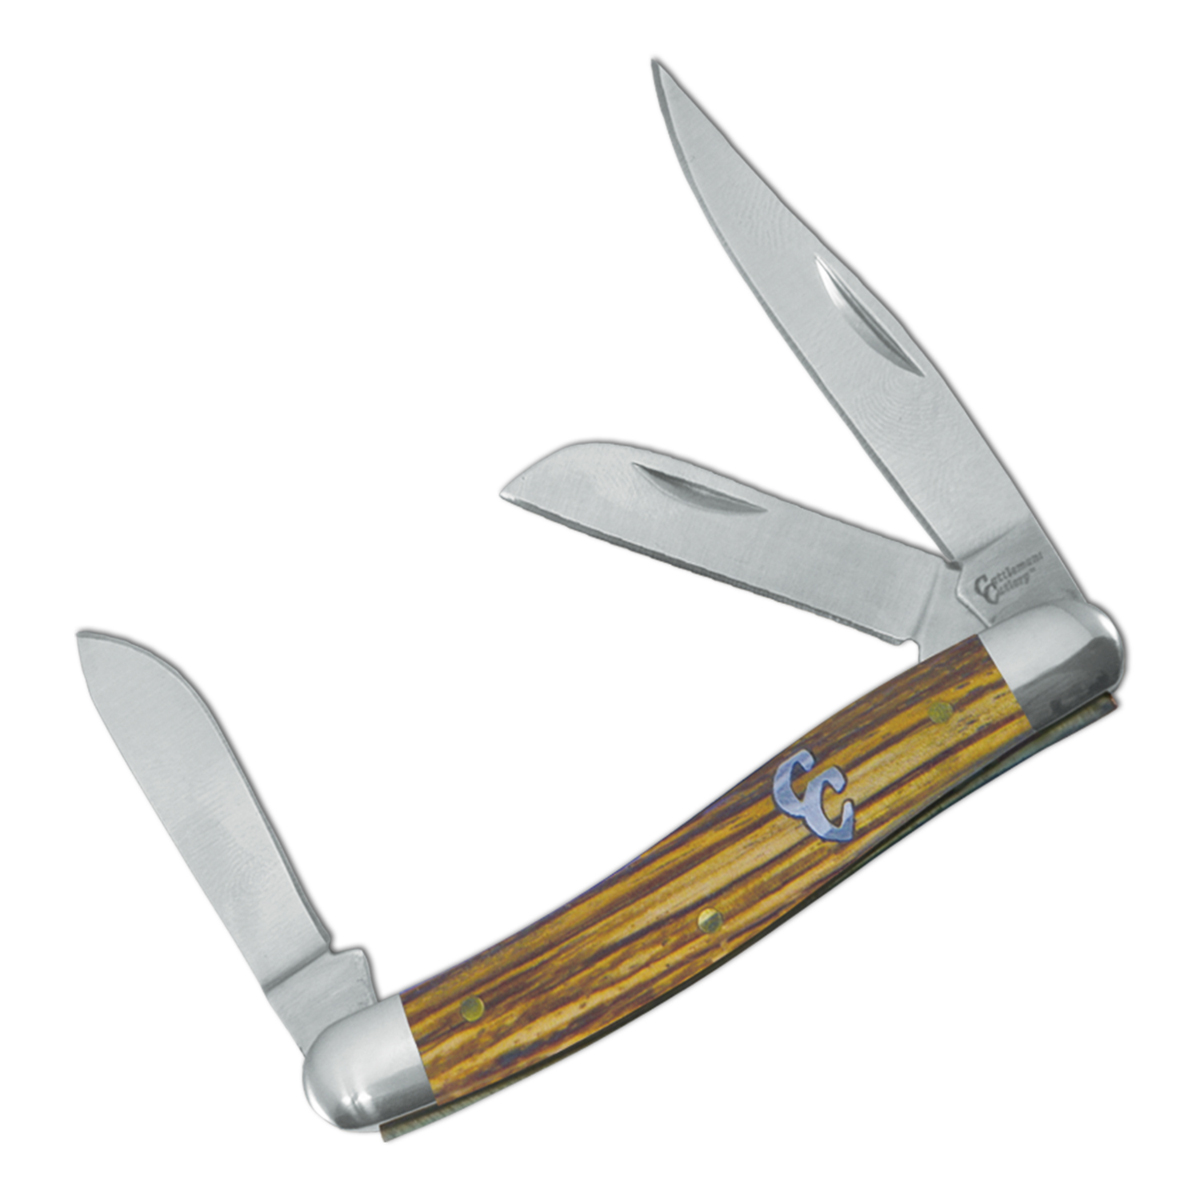 3-Blade Sagebrush Stockman Pocket Knife